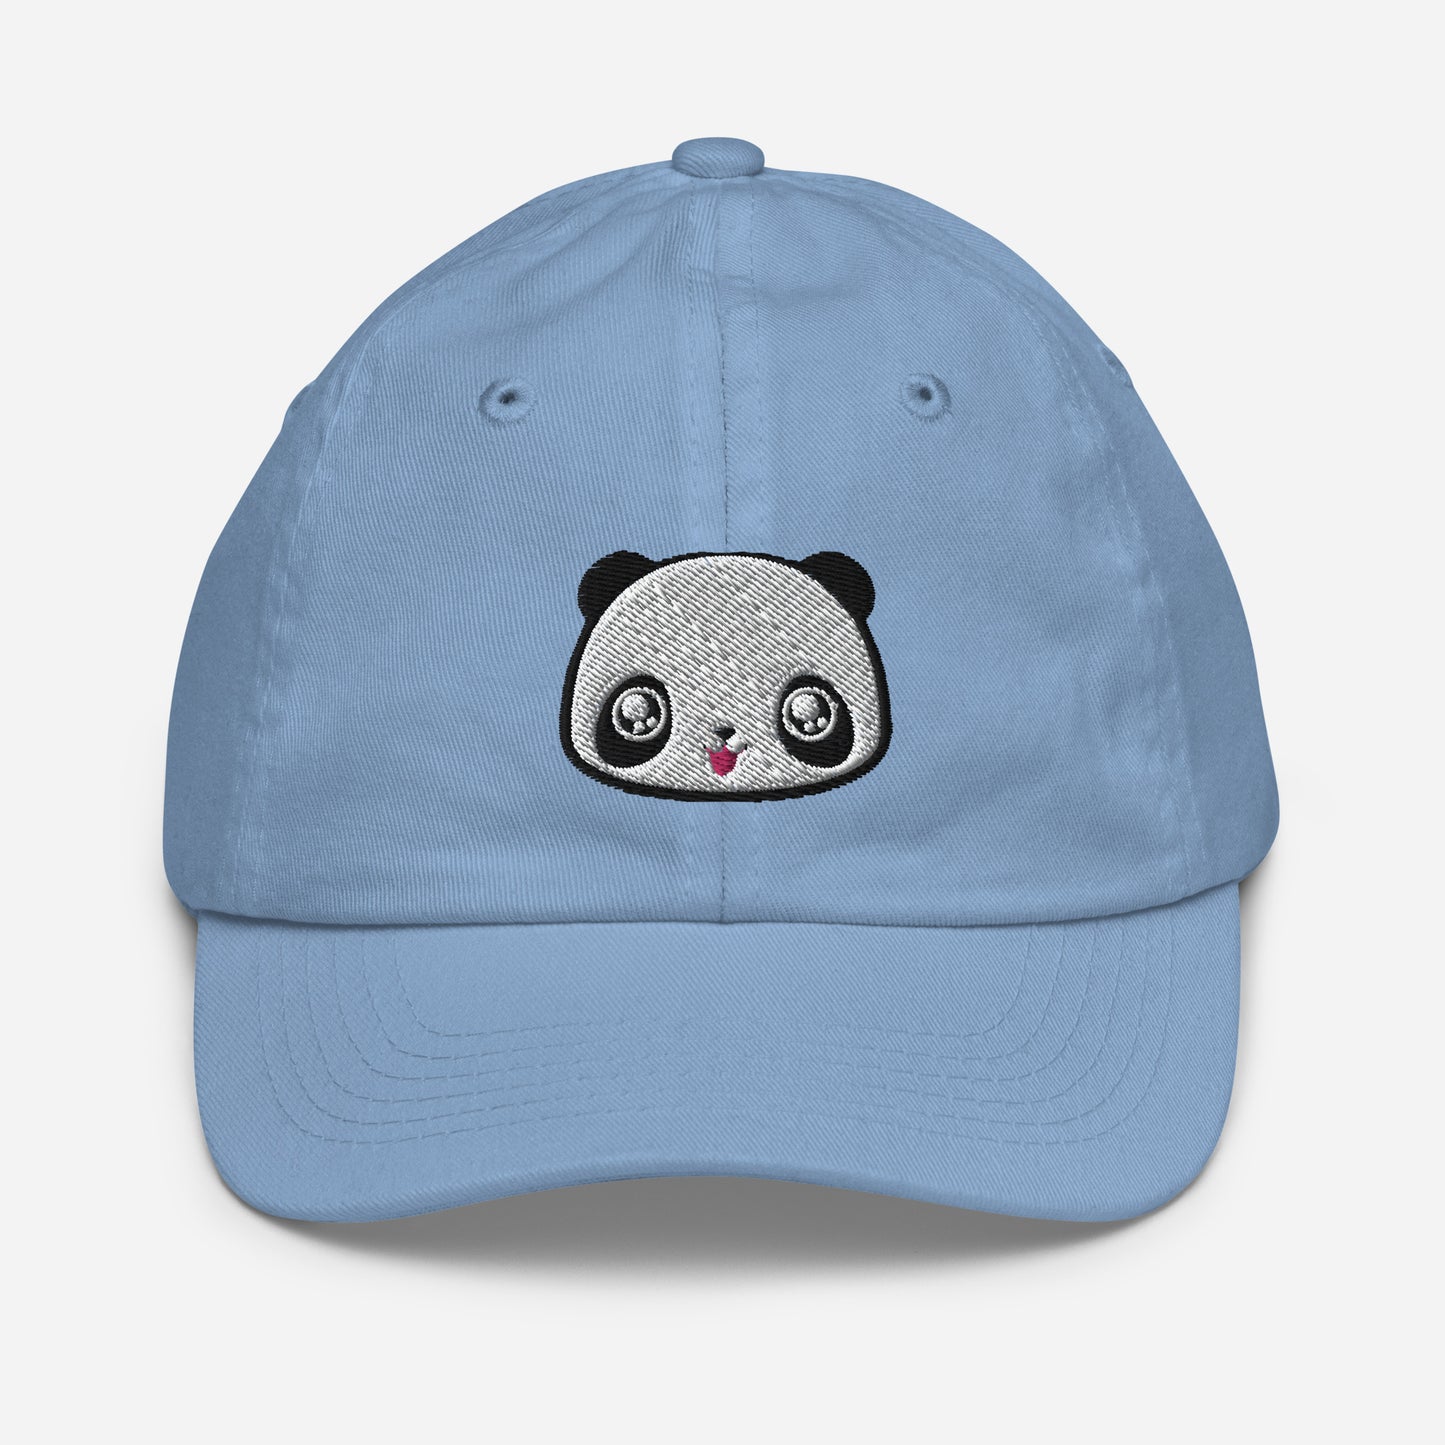 Baby blue baseball cap with print of panda head